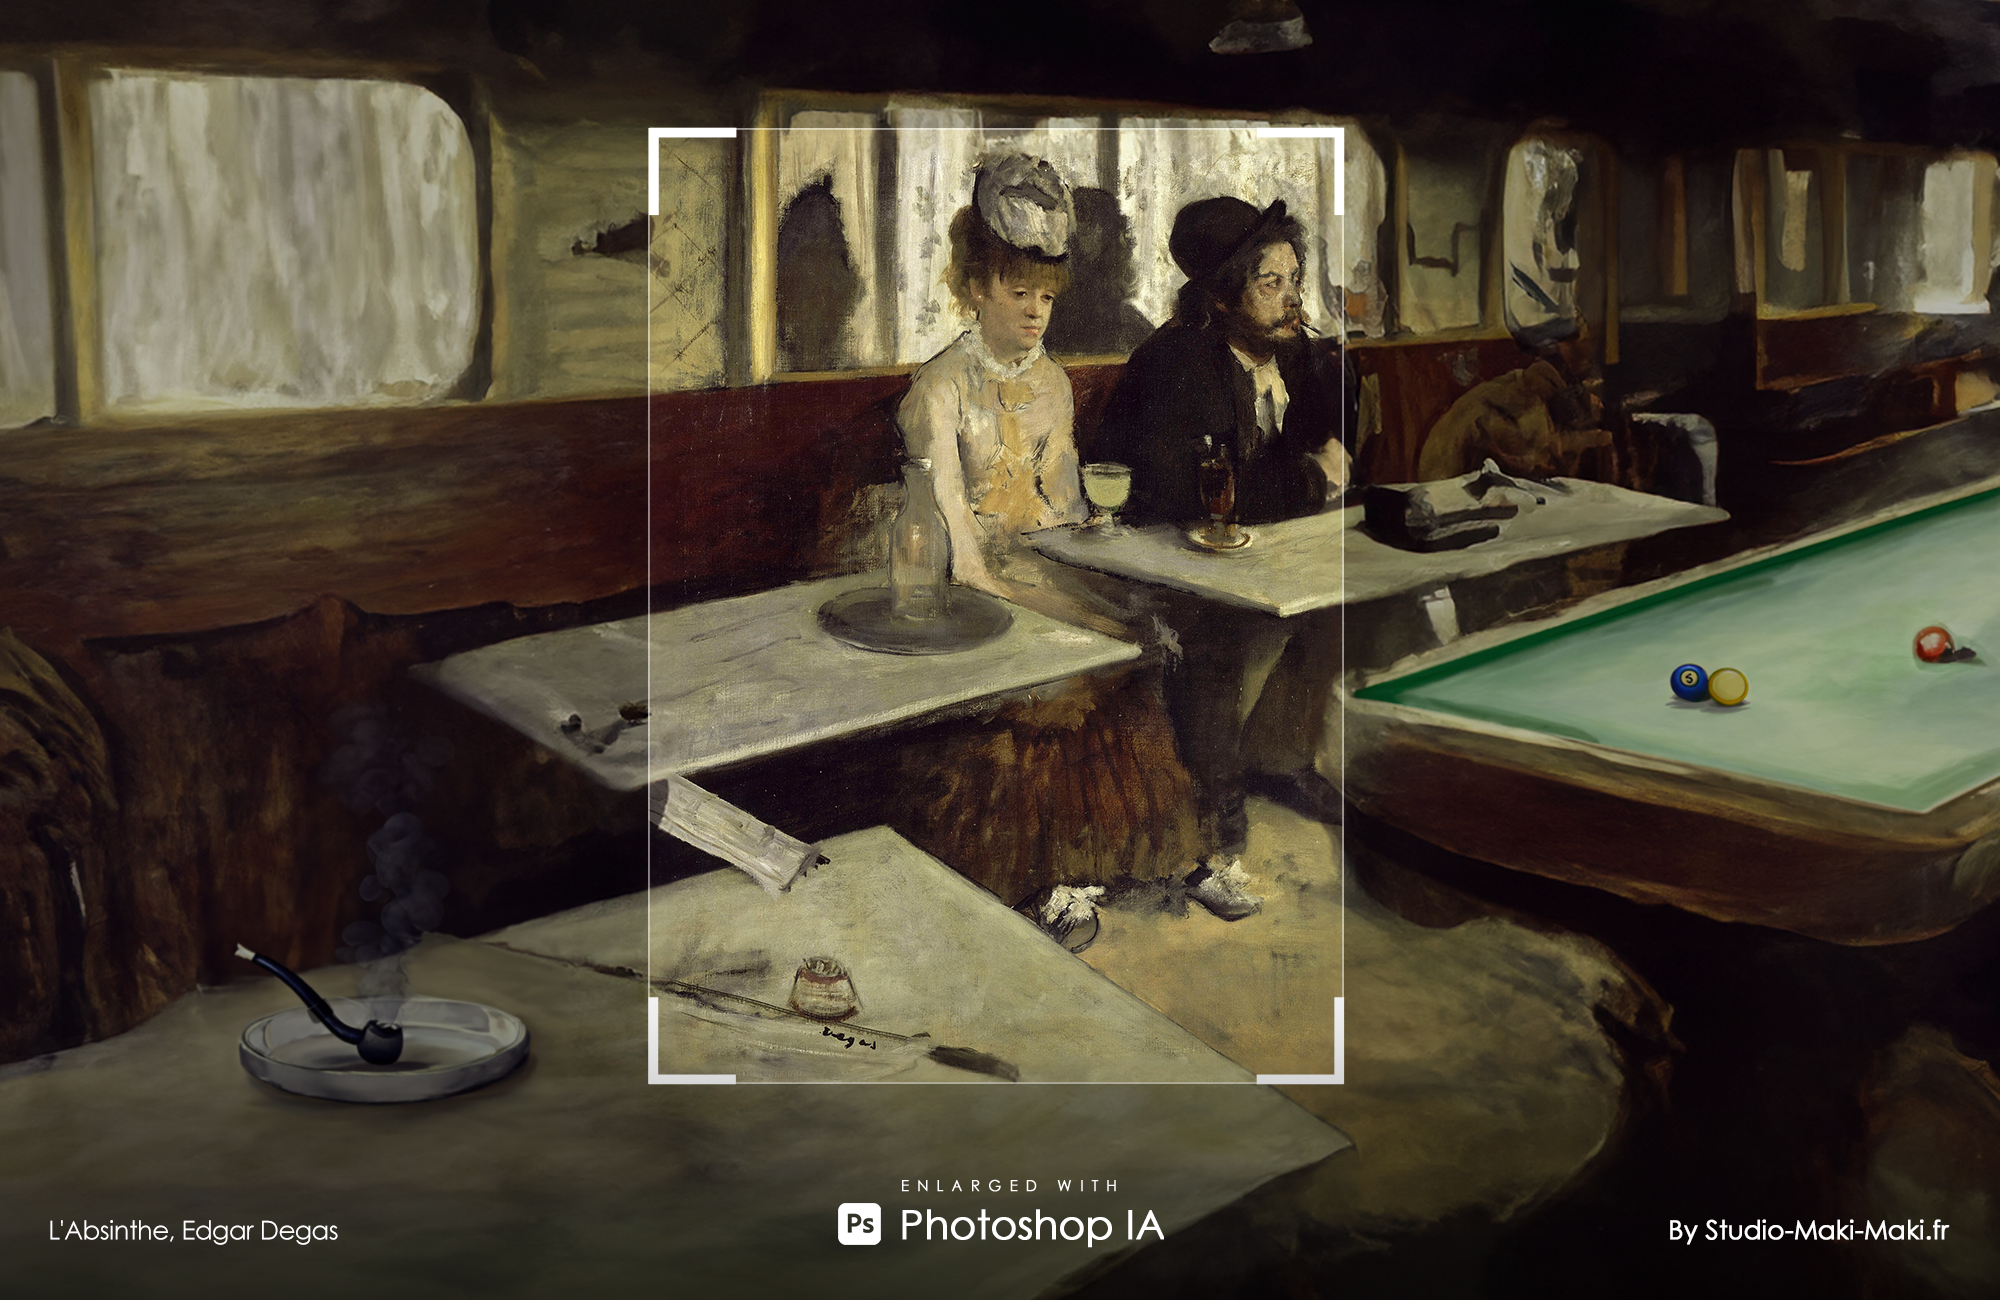 L'Absinthe, Edgar Degas - Enlarged with Photoshop IA - By Studio Maki Maki